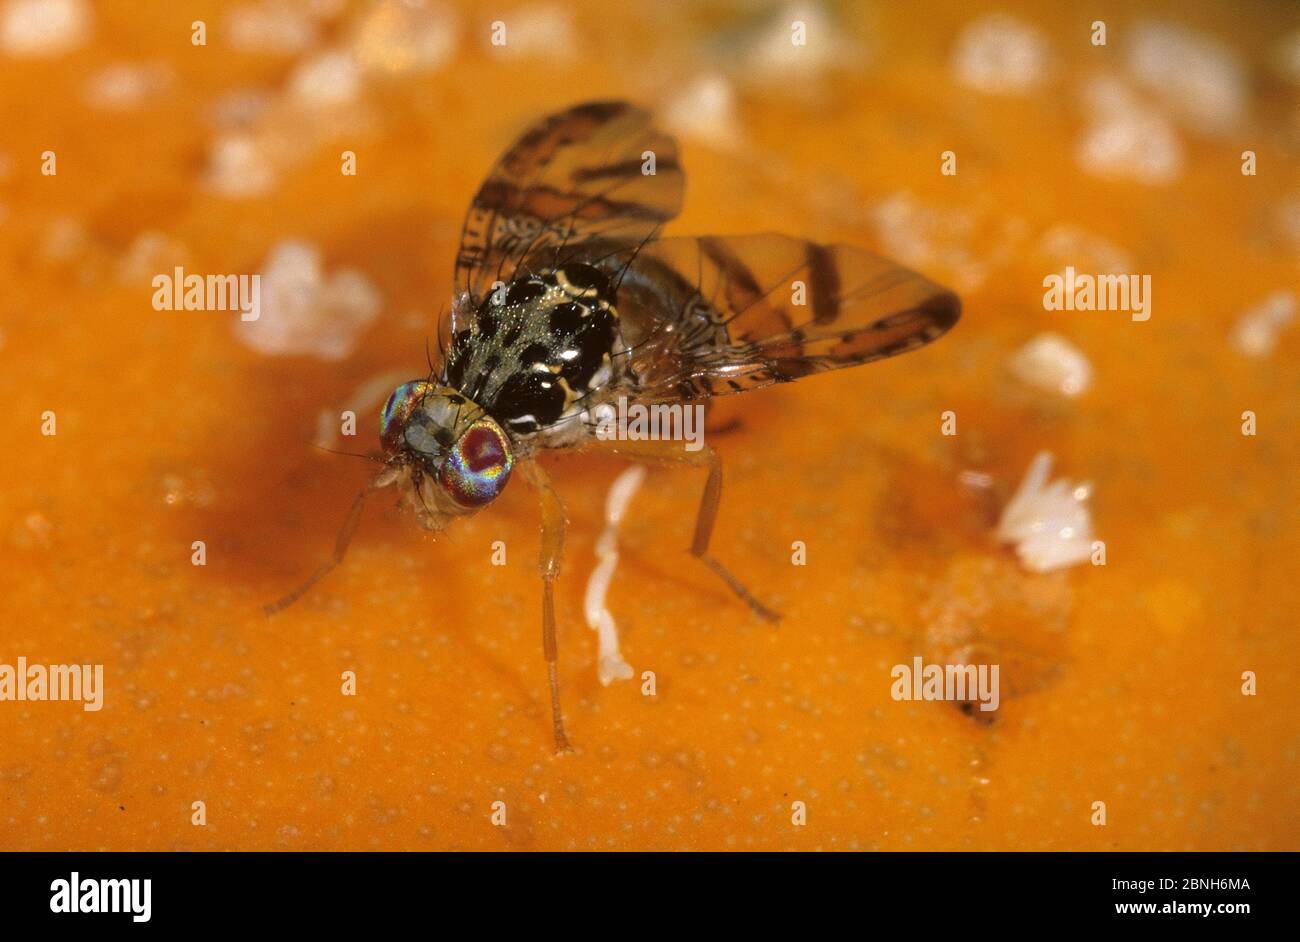 Mediterranean fruit fly (Ceratitis capitata) female laying eggs into a papaya fruit. Introduced pest species in Australia. Stock Photo